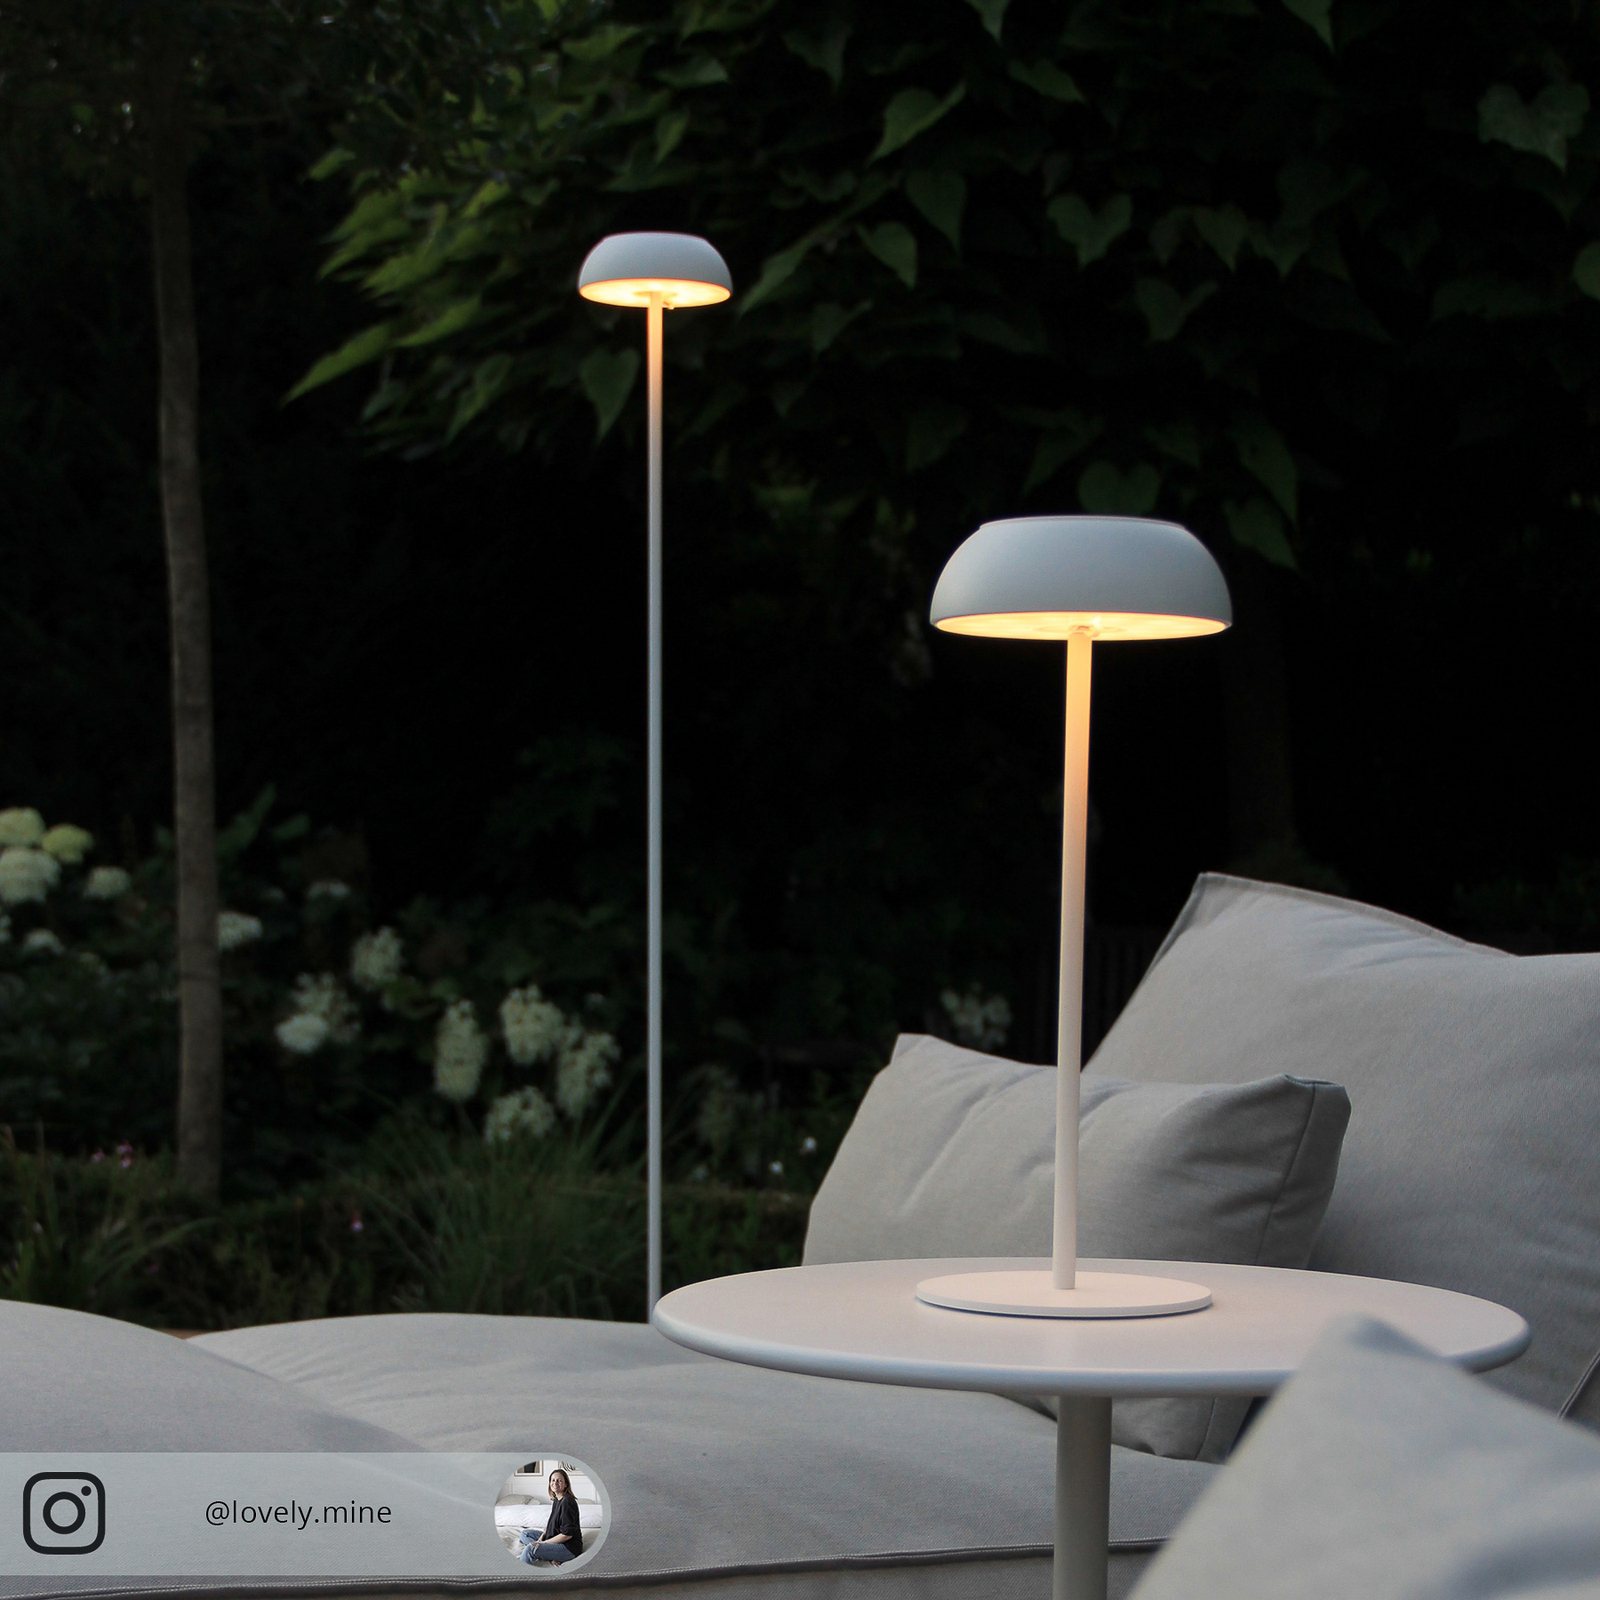 Axolight Float LED designerbordlampe, hvit